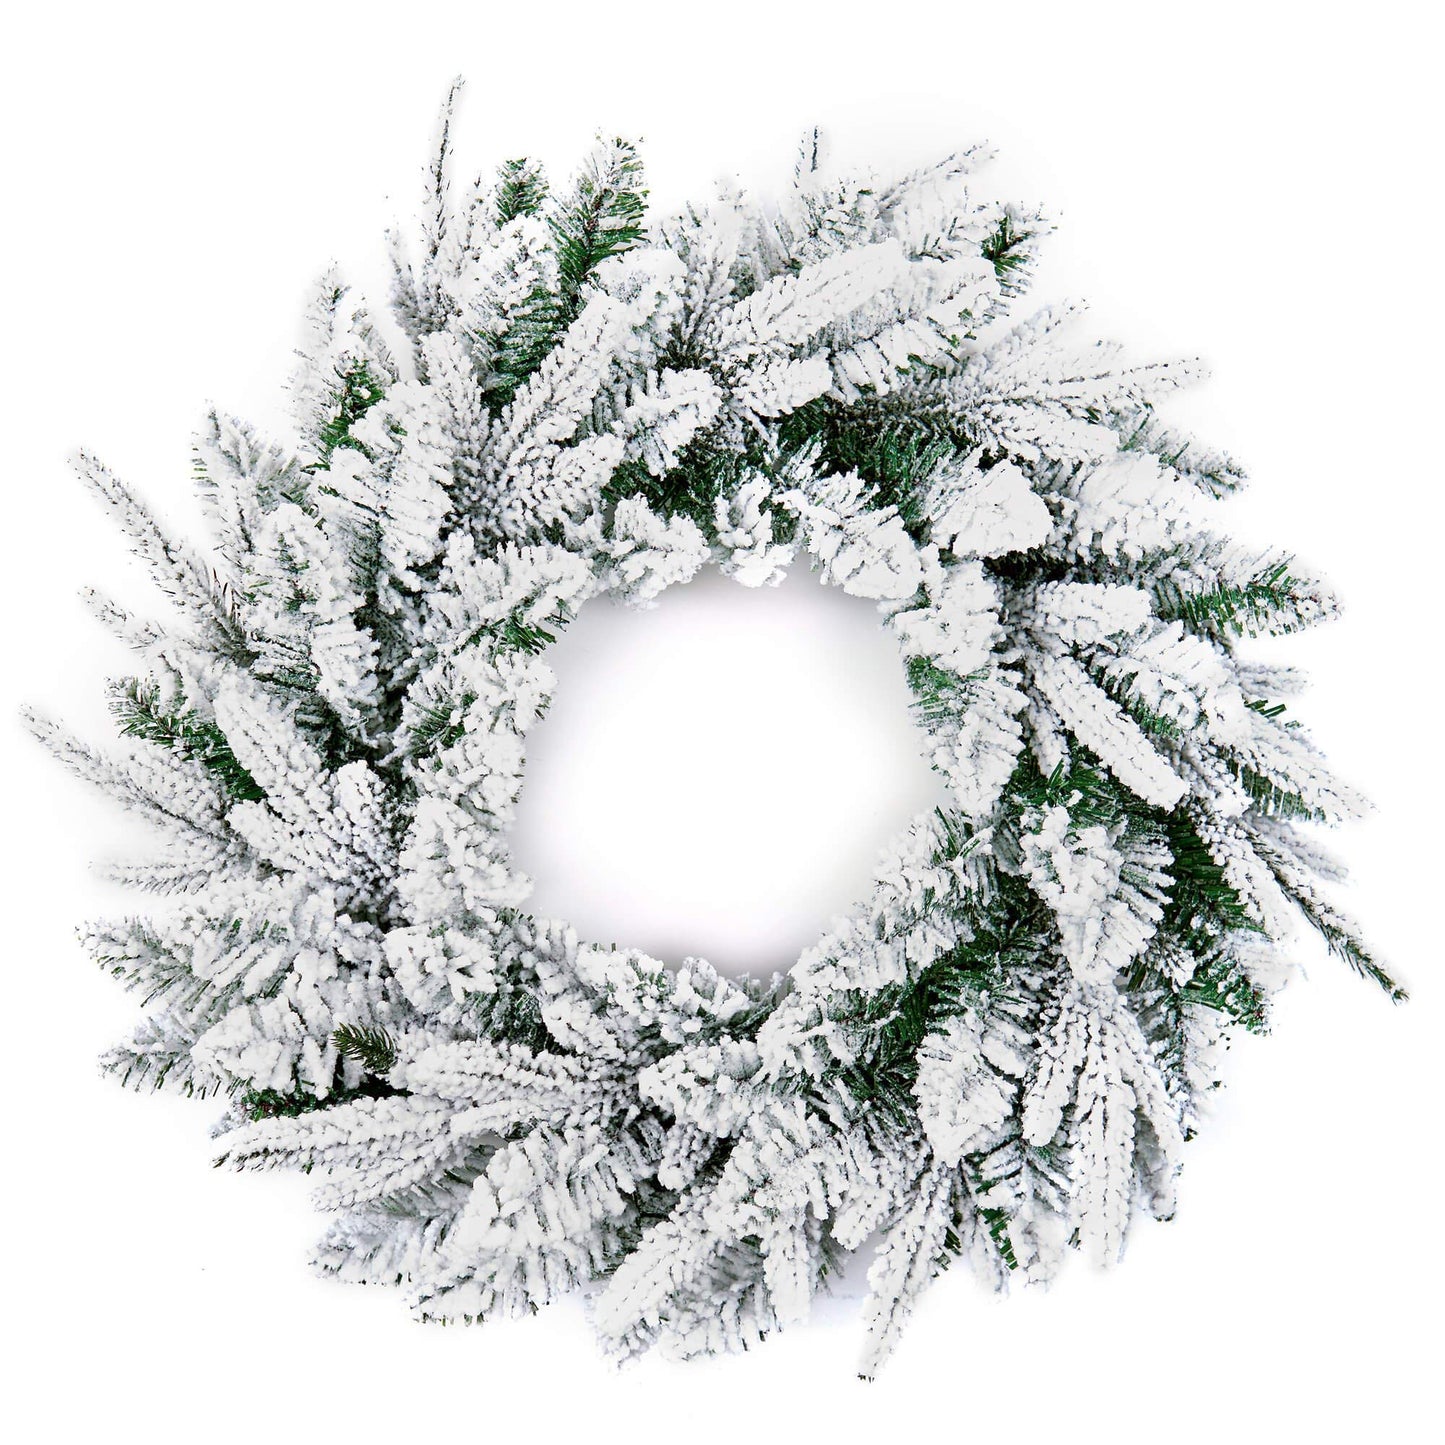 Lapland Wreath